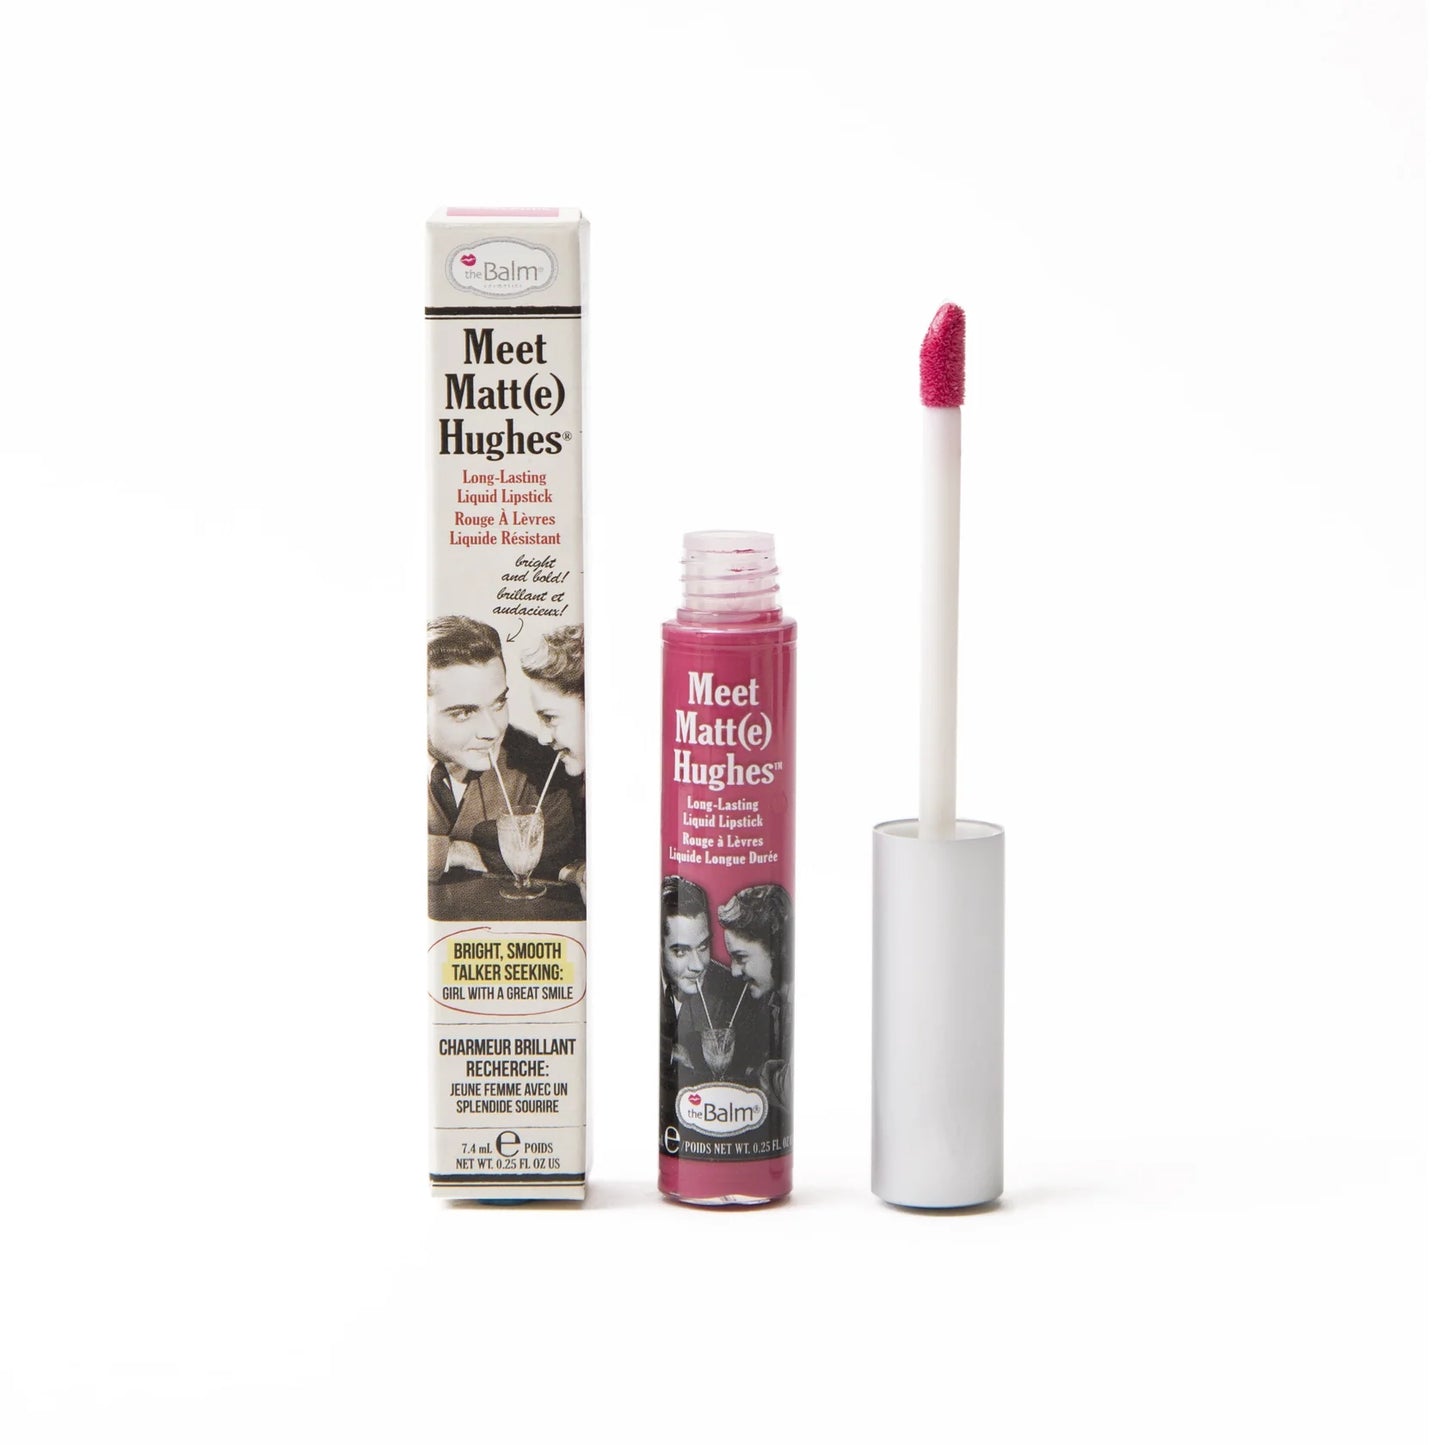 Meet Matt(e) Hughes® Liquid Lipstick